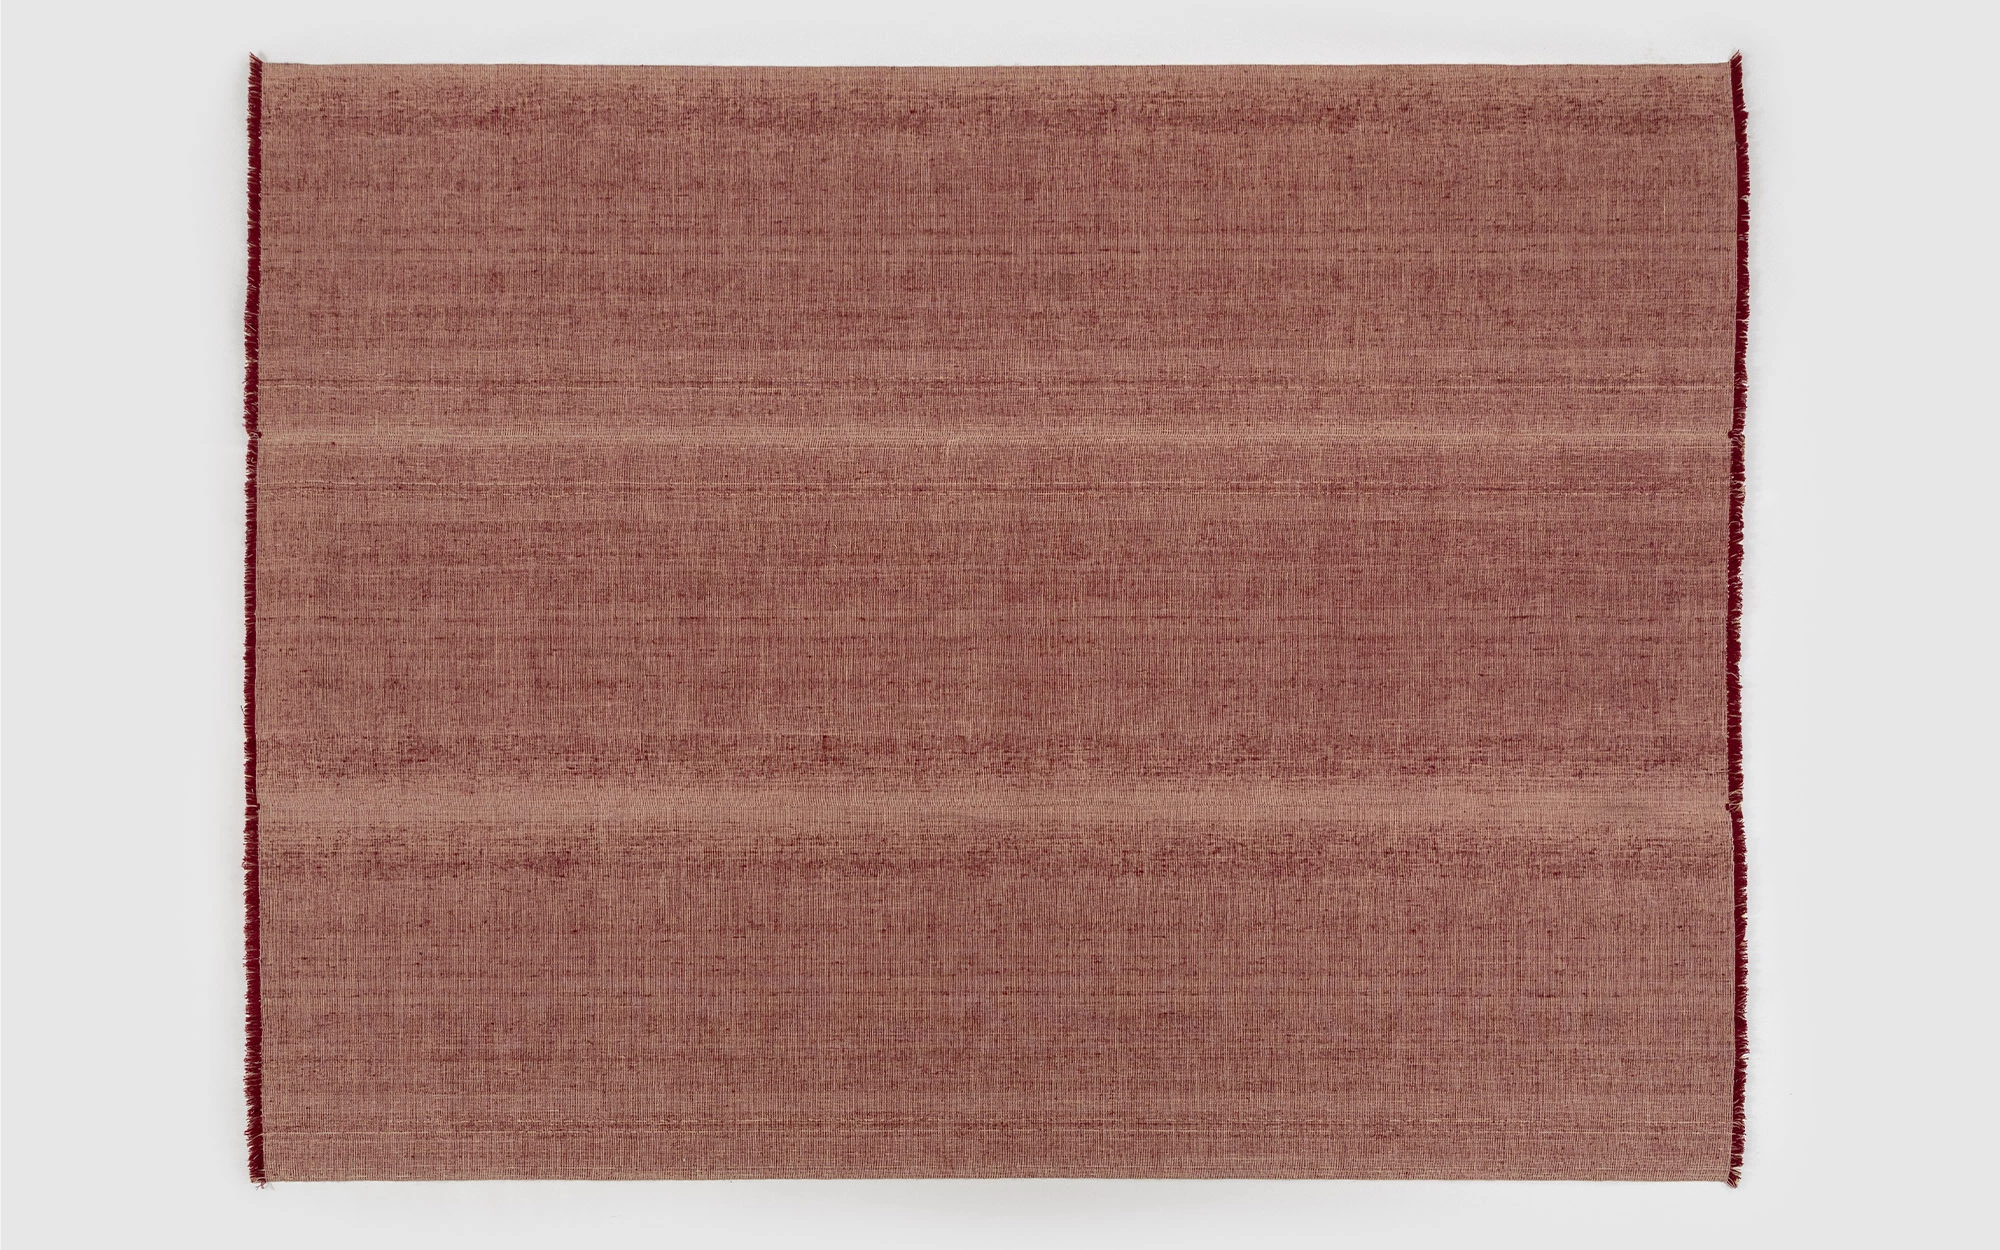 Wilton Carpet L - Ronan & Erwan Bouroullec - Table light - Galerie kreo